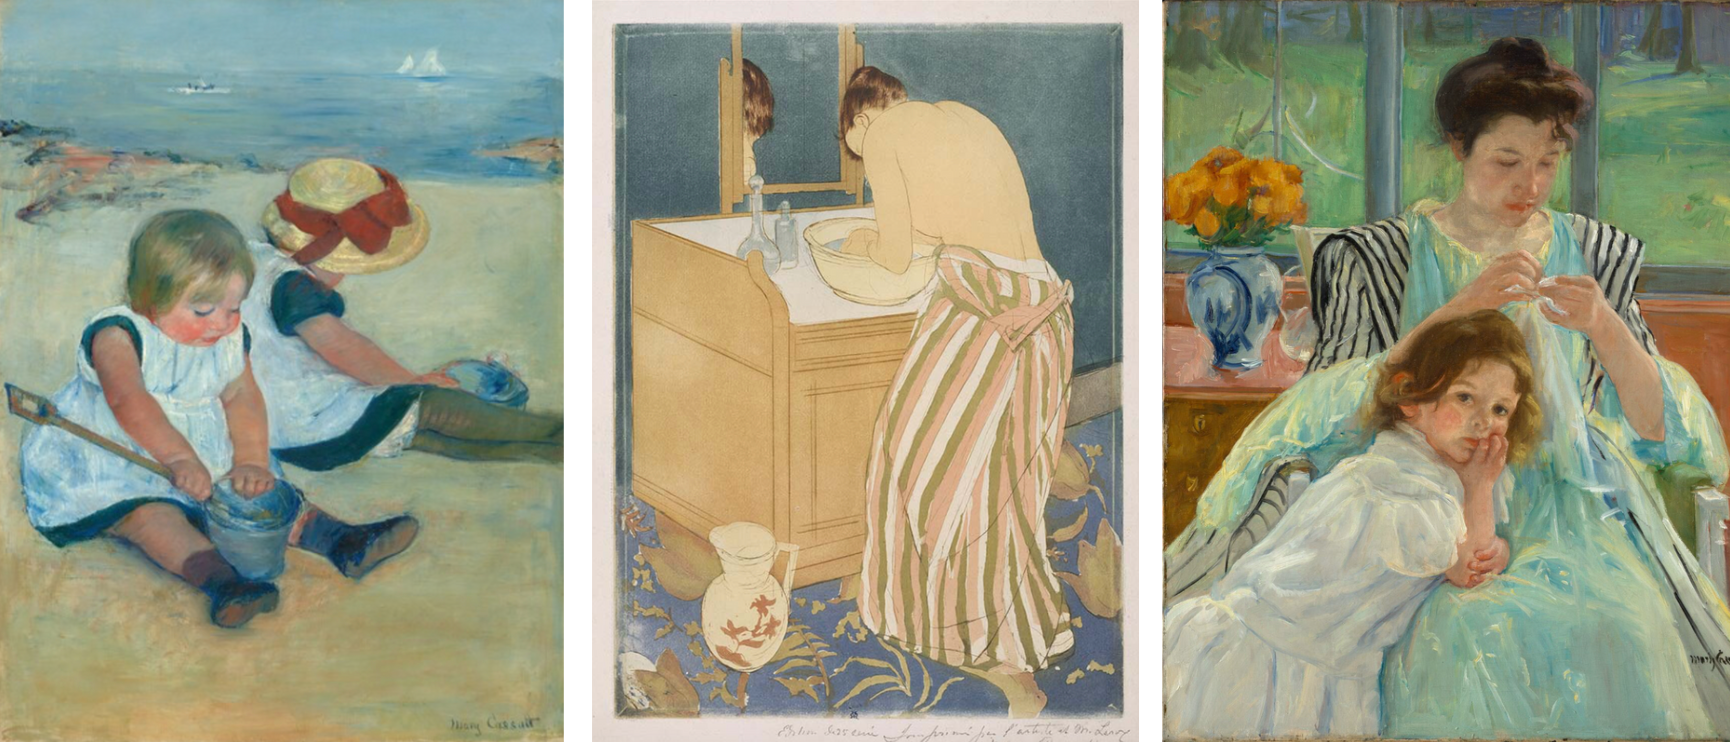 Mary Cassatt paintings